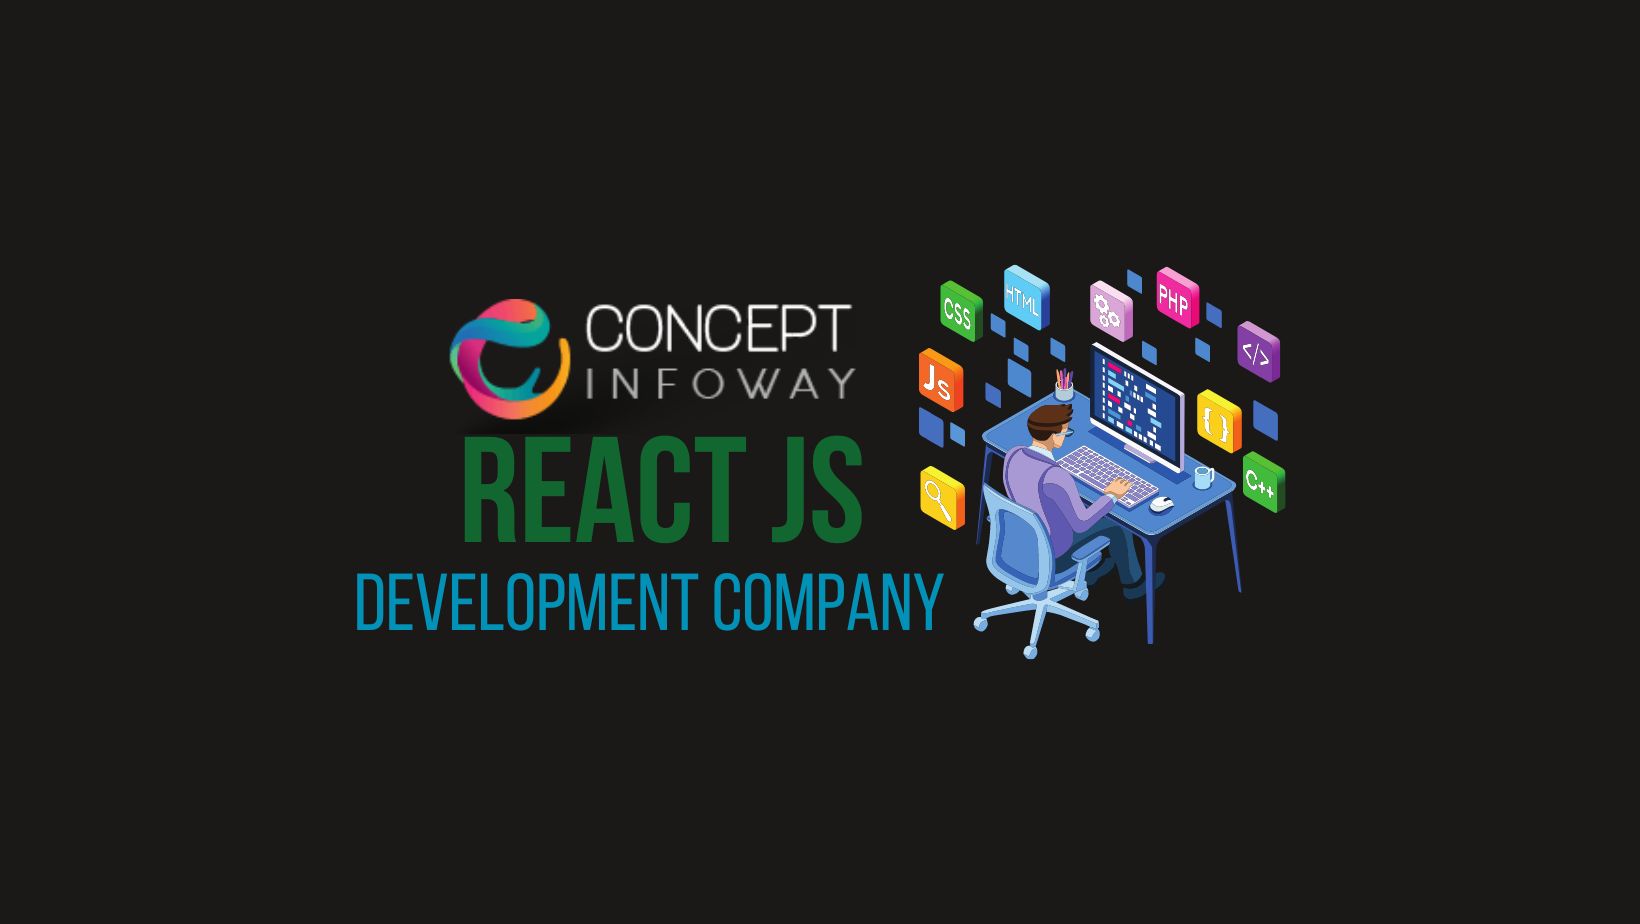 React JS Development Company - Concept Infoway